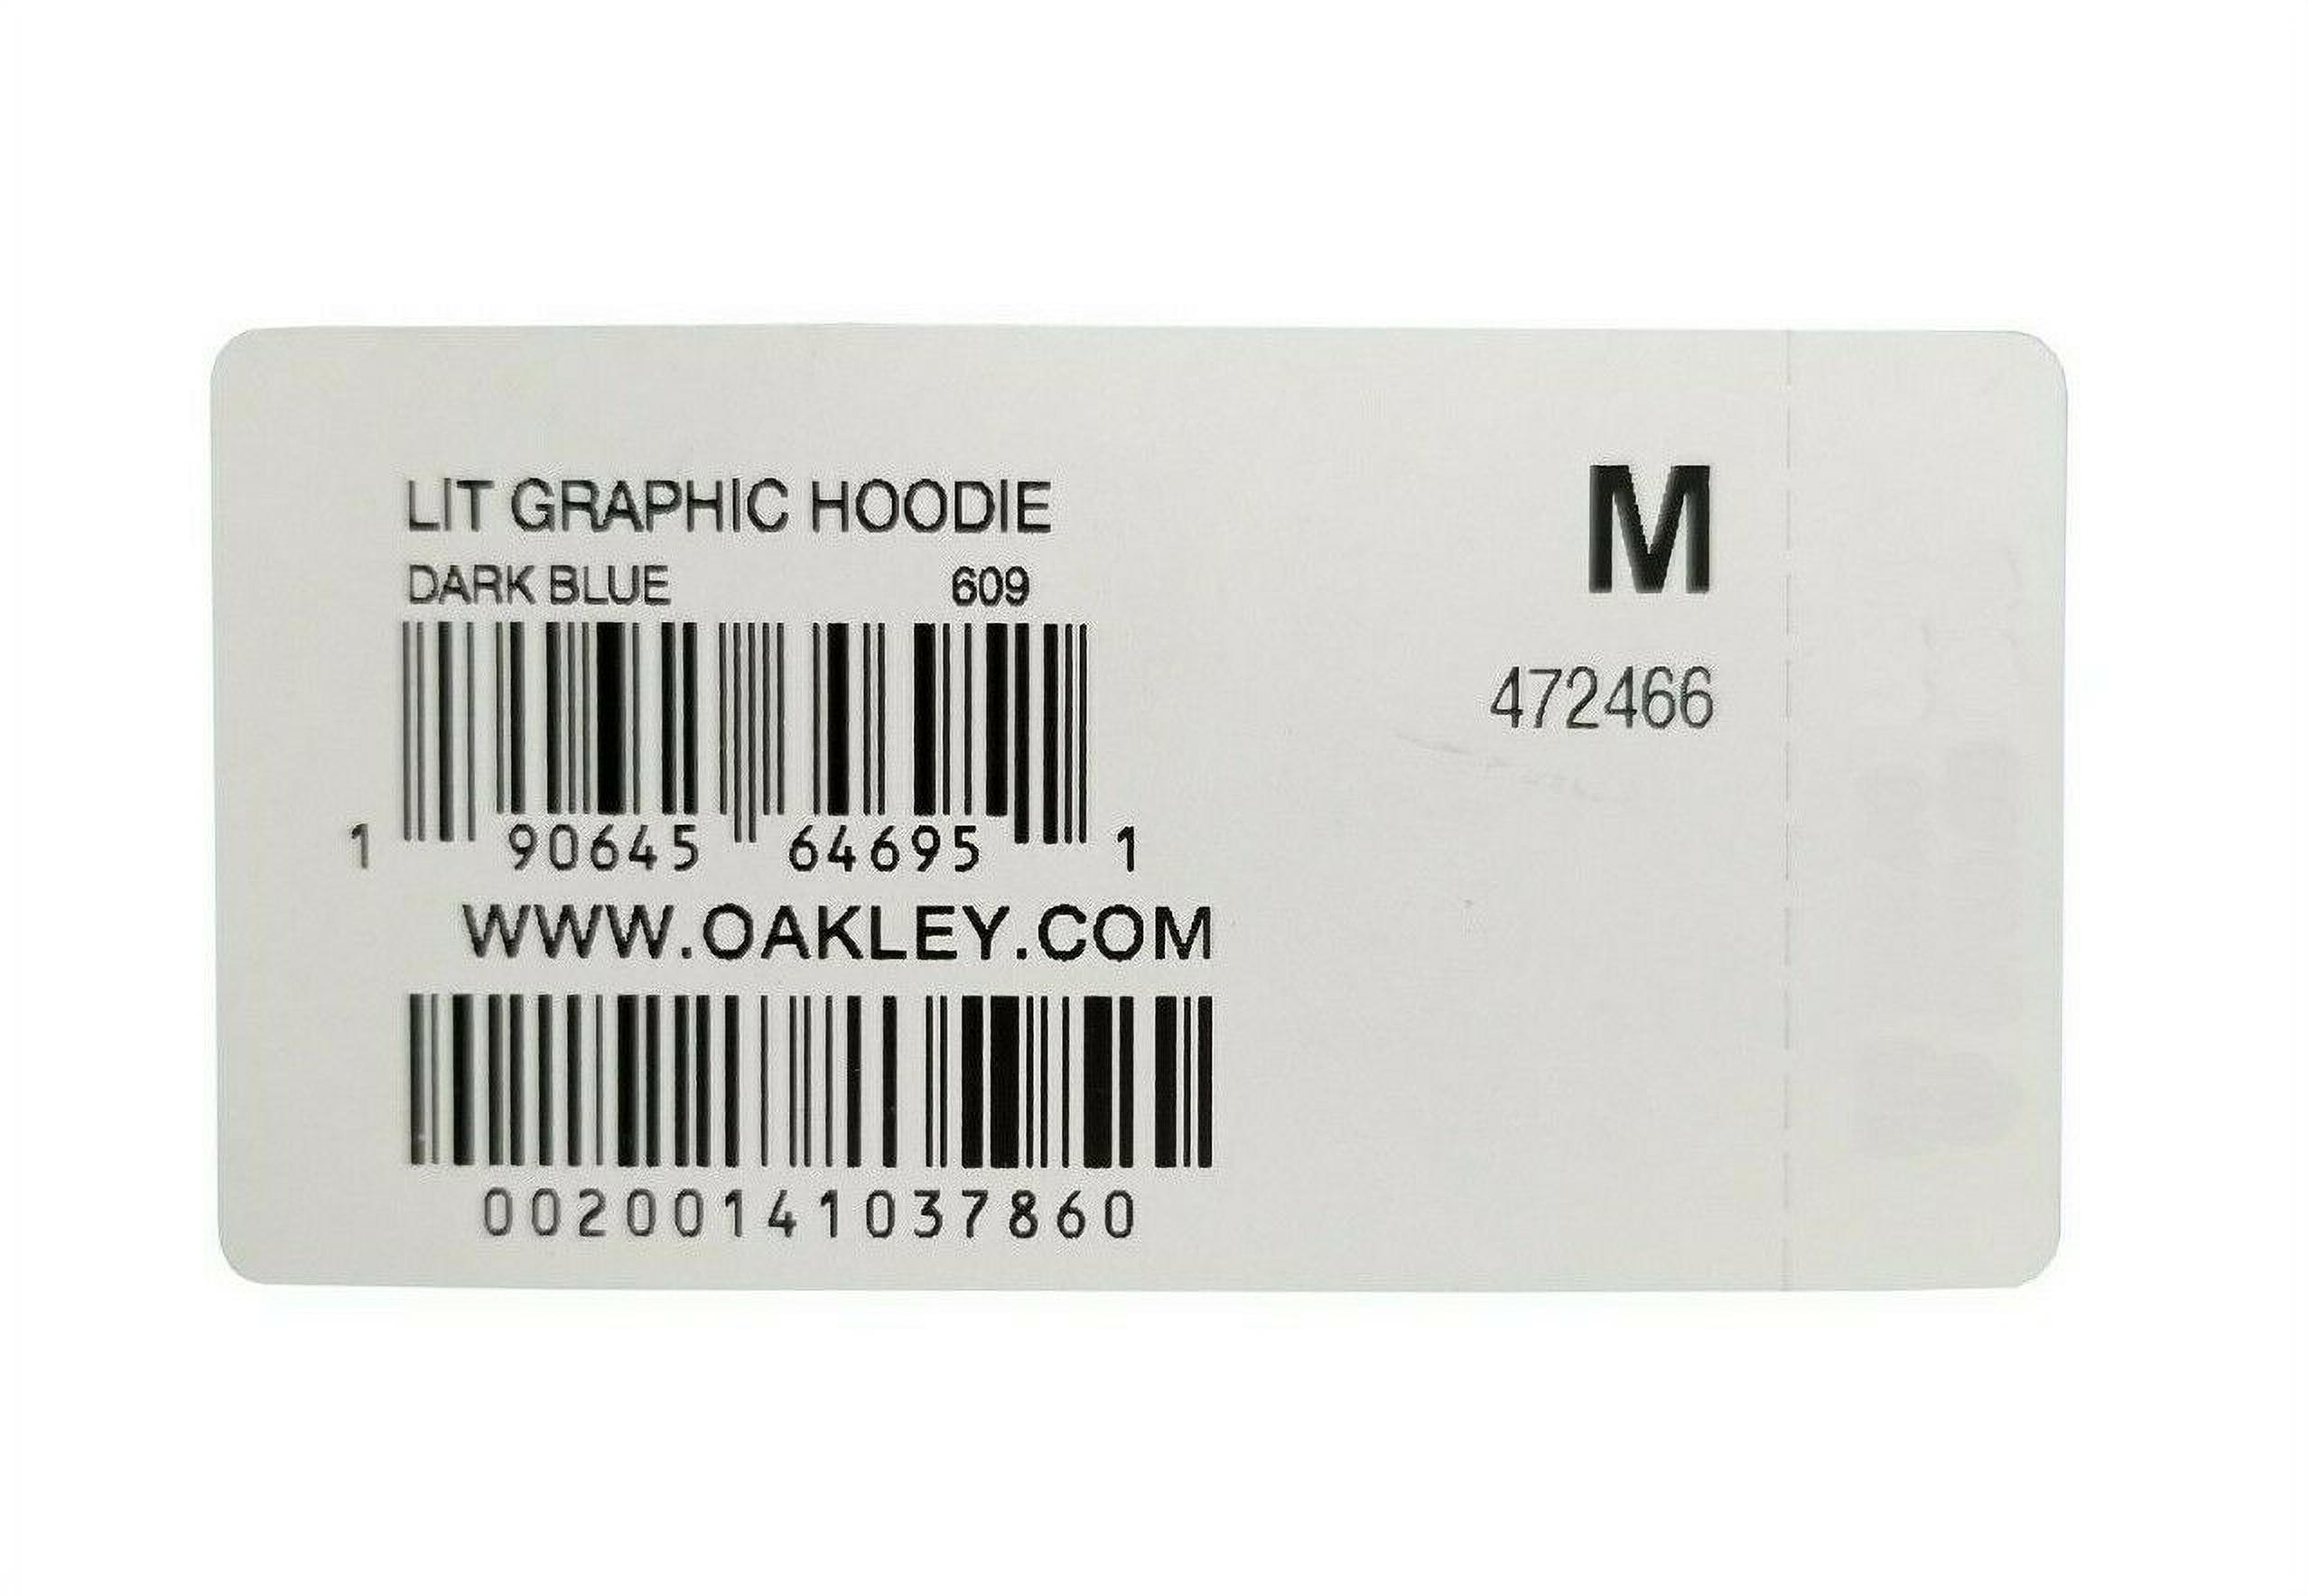 Oakley Men's Lit Graphic Hoodie 472466 Dark Blue Size M - image 4 of 4